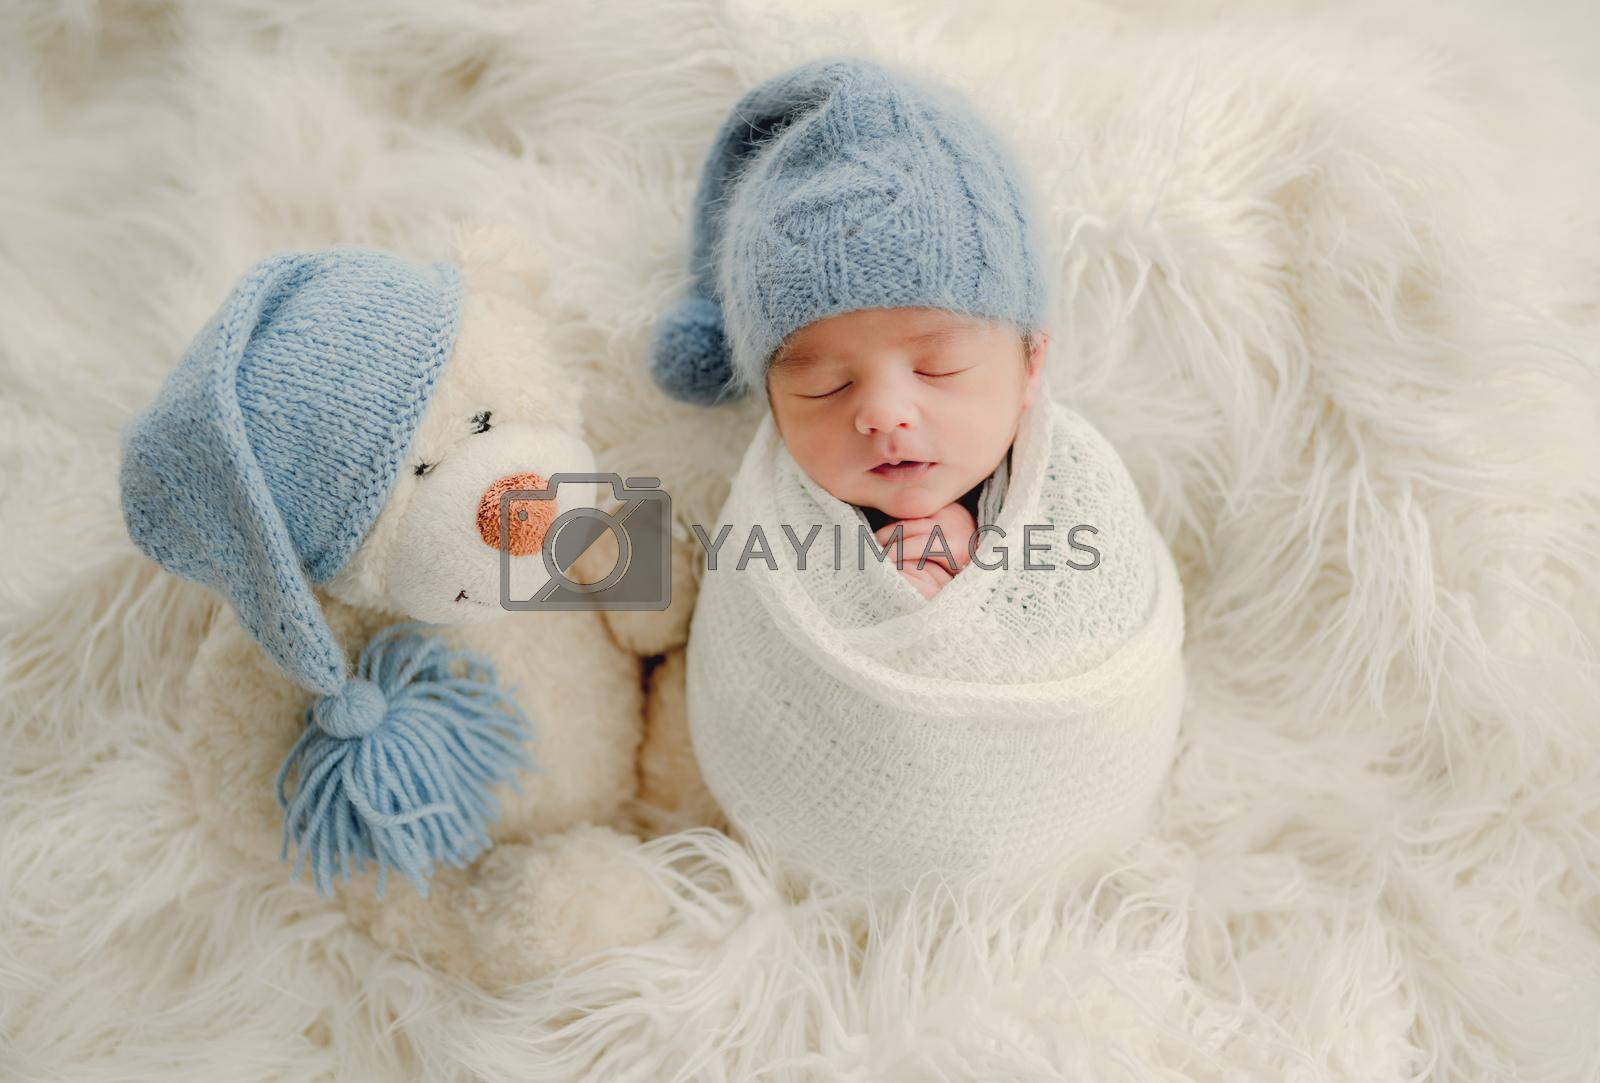 Royalty free image of Newborn baby boy portrait by tan4ikk1